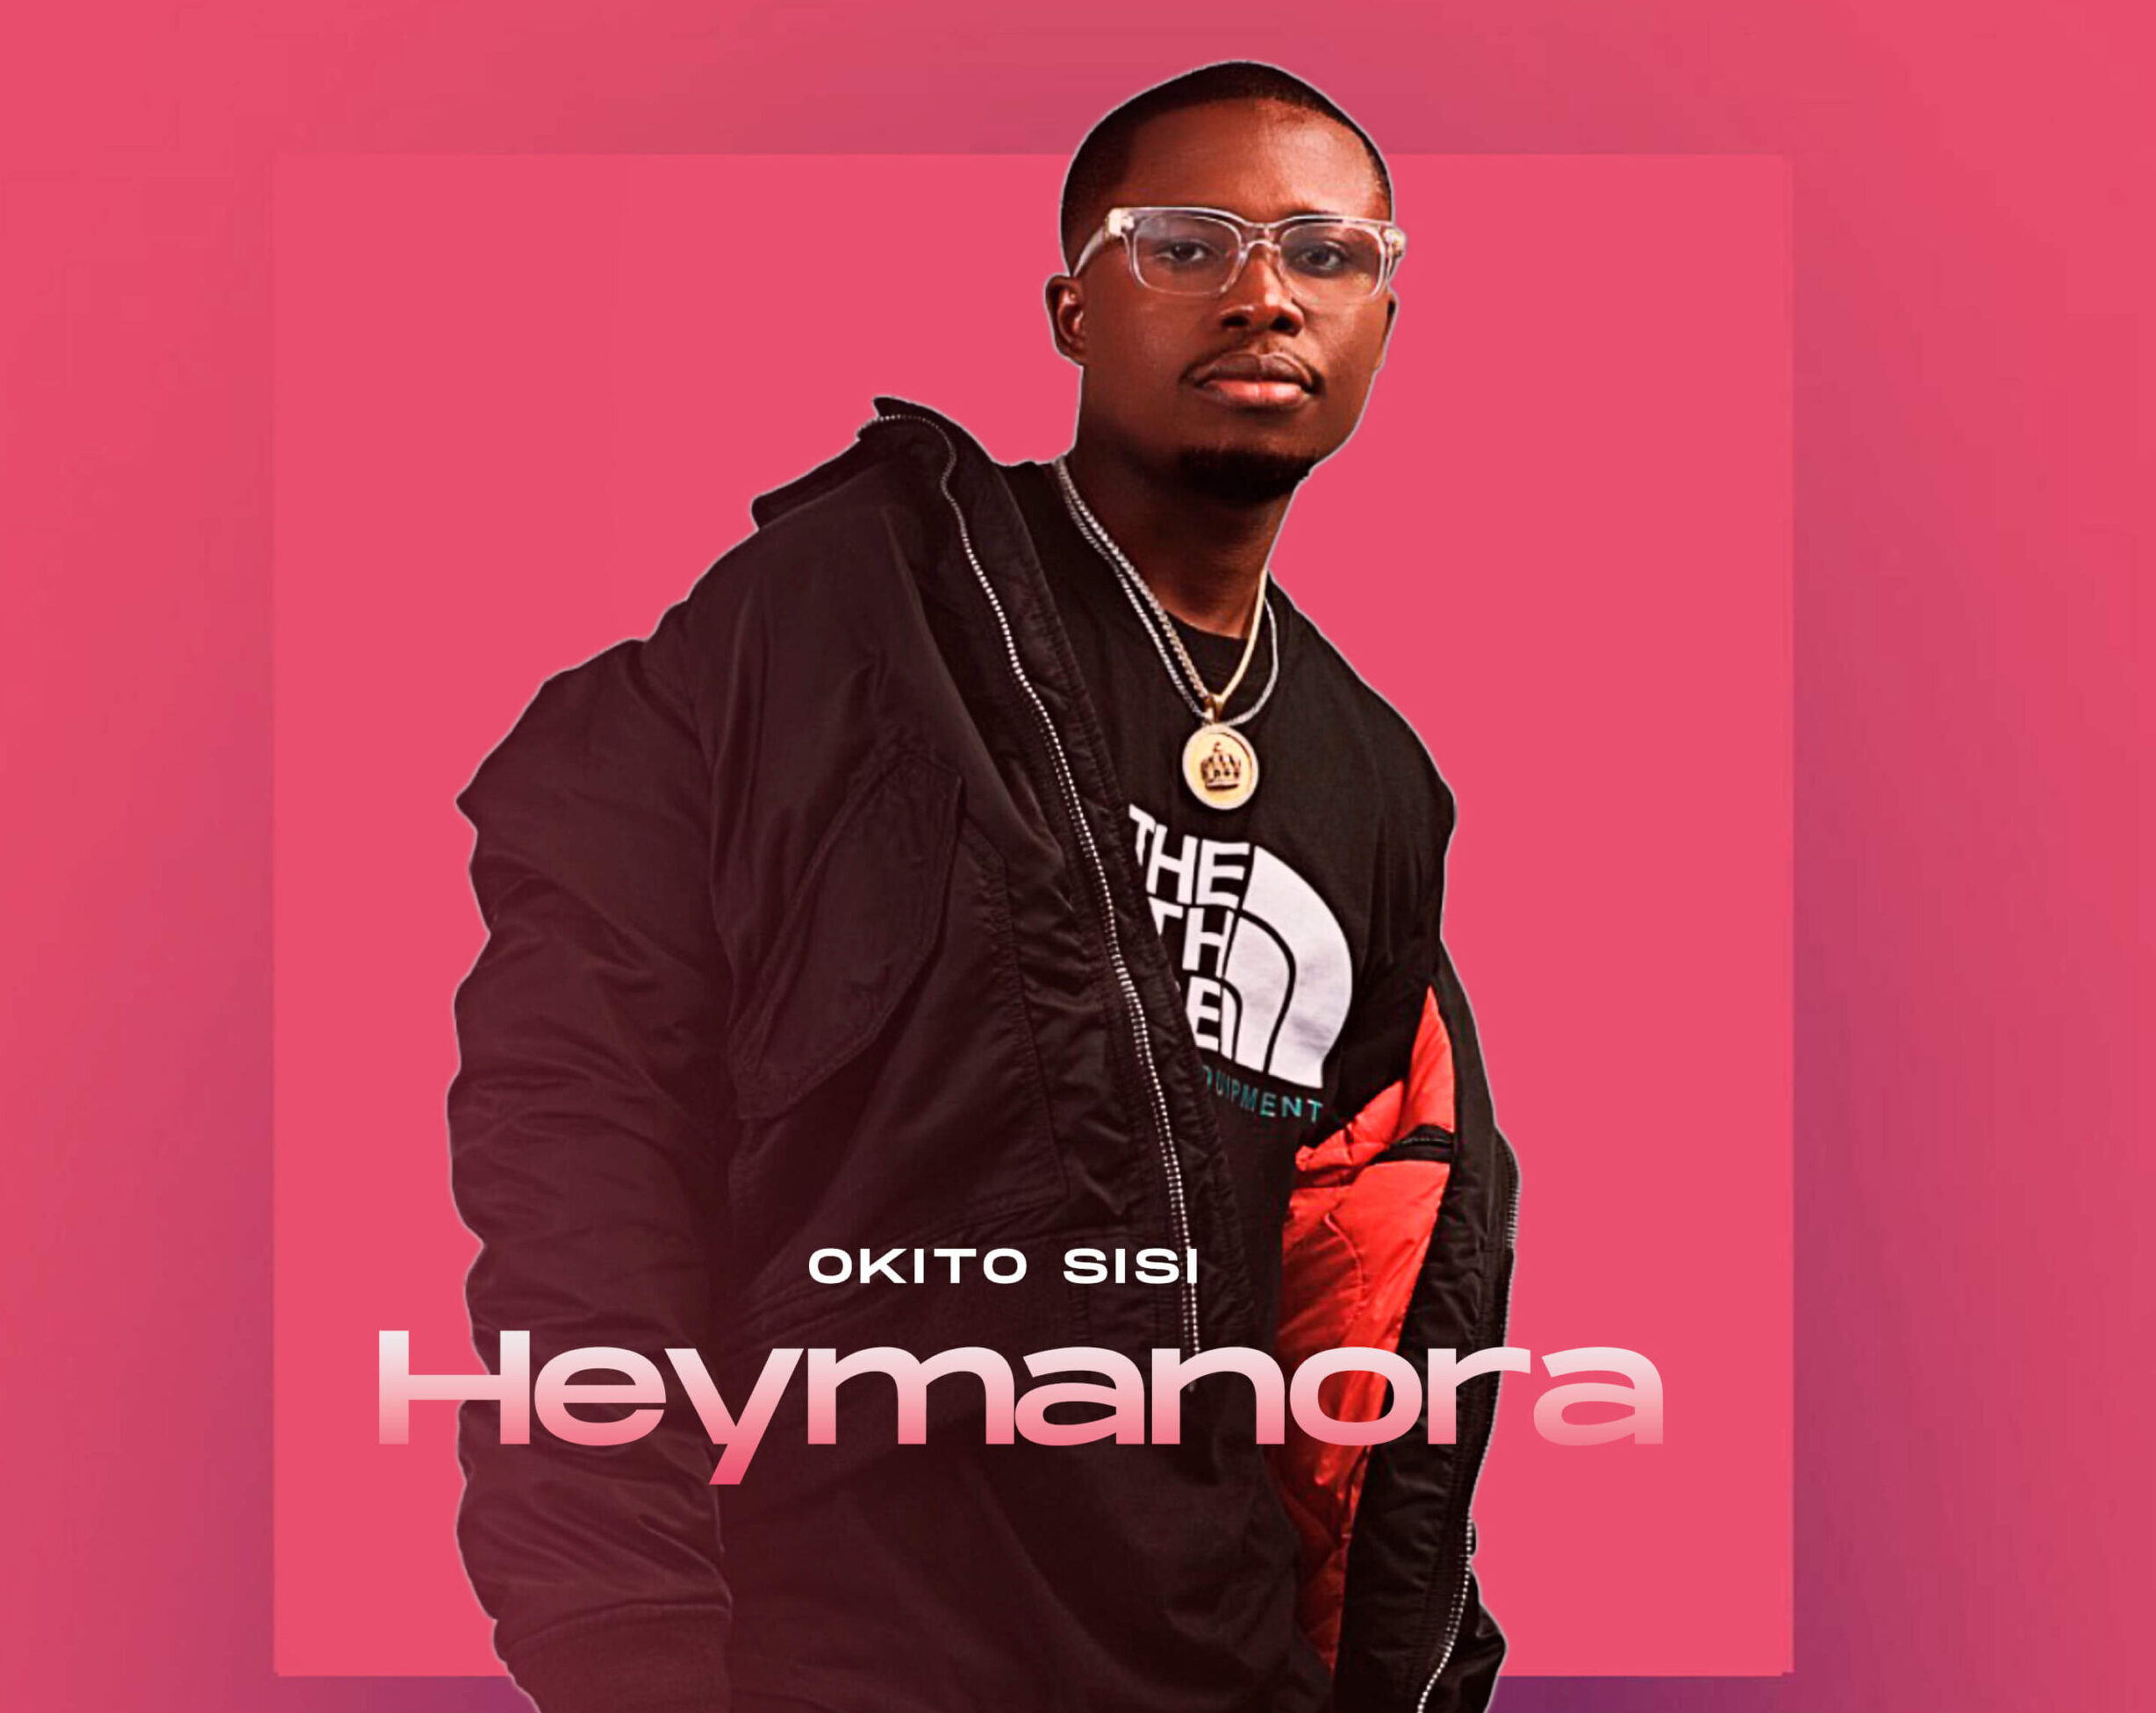 Okito Sisi professes love on new song “Heymanora”